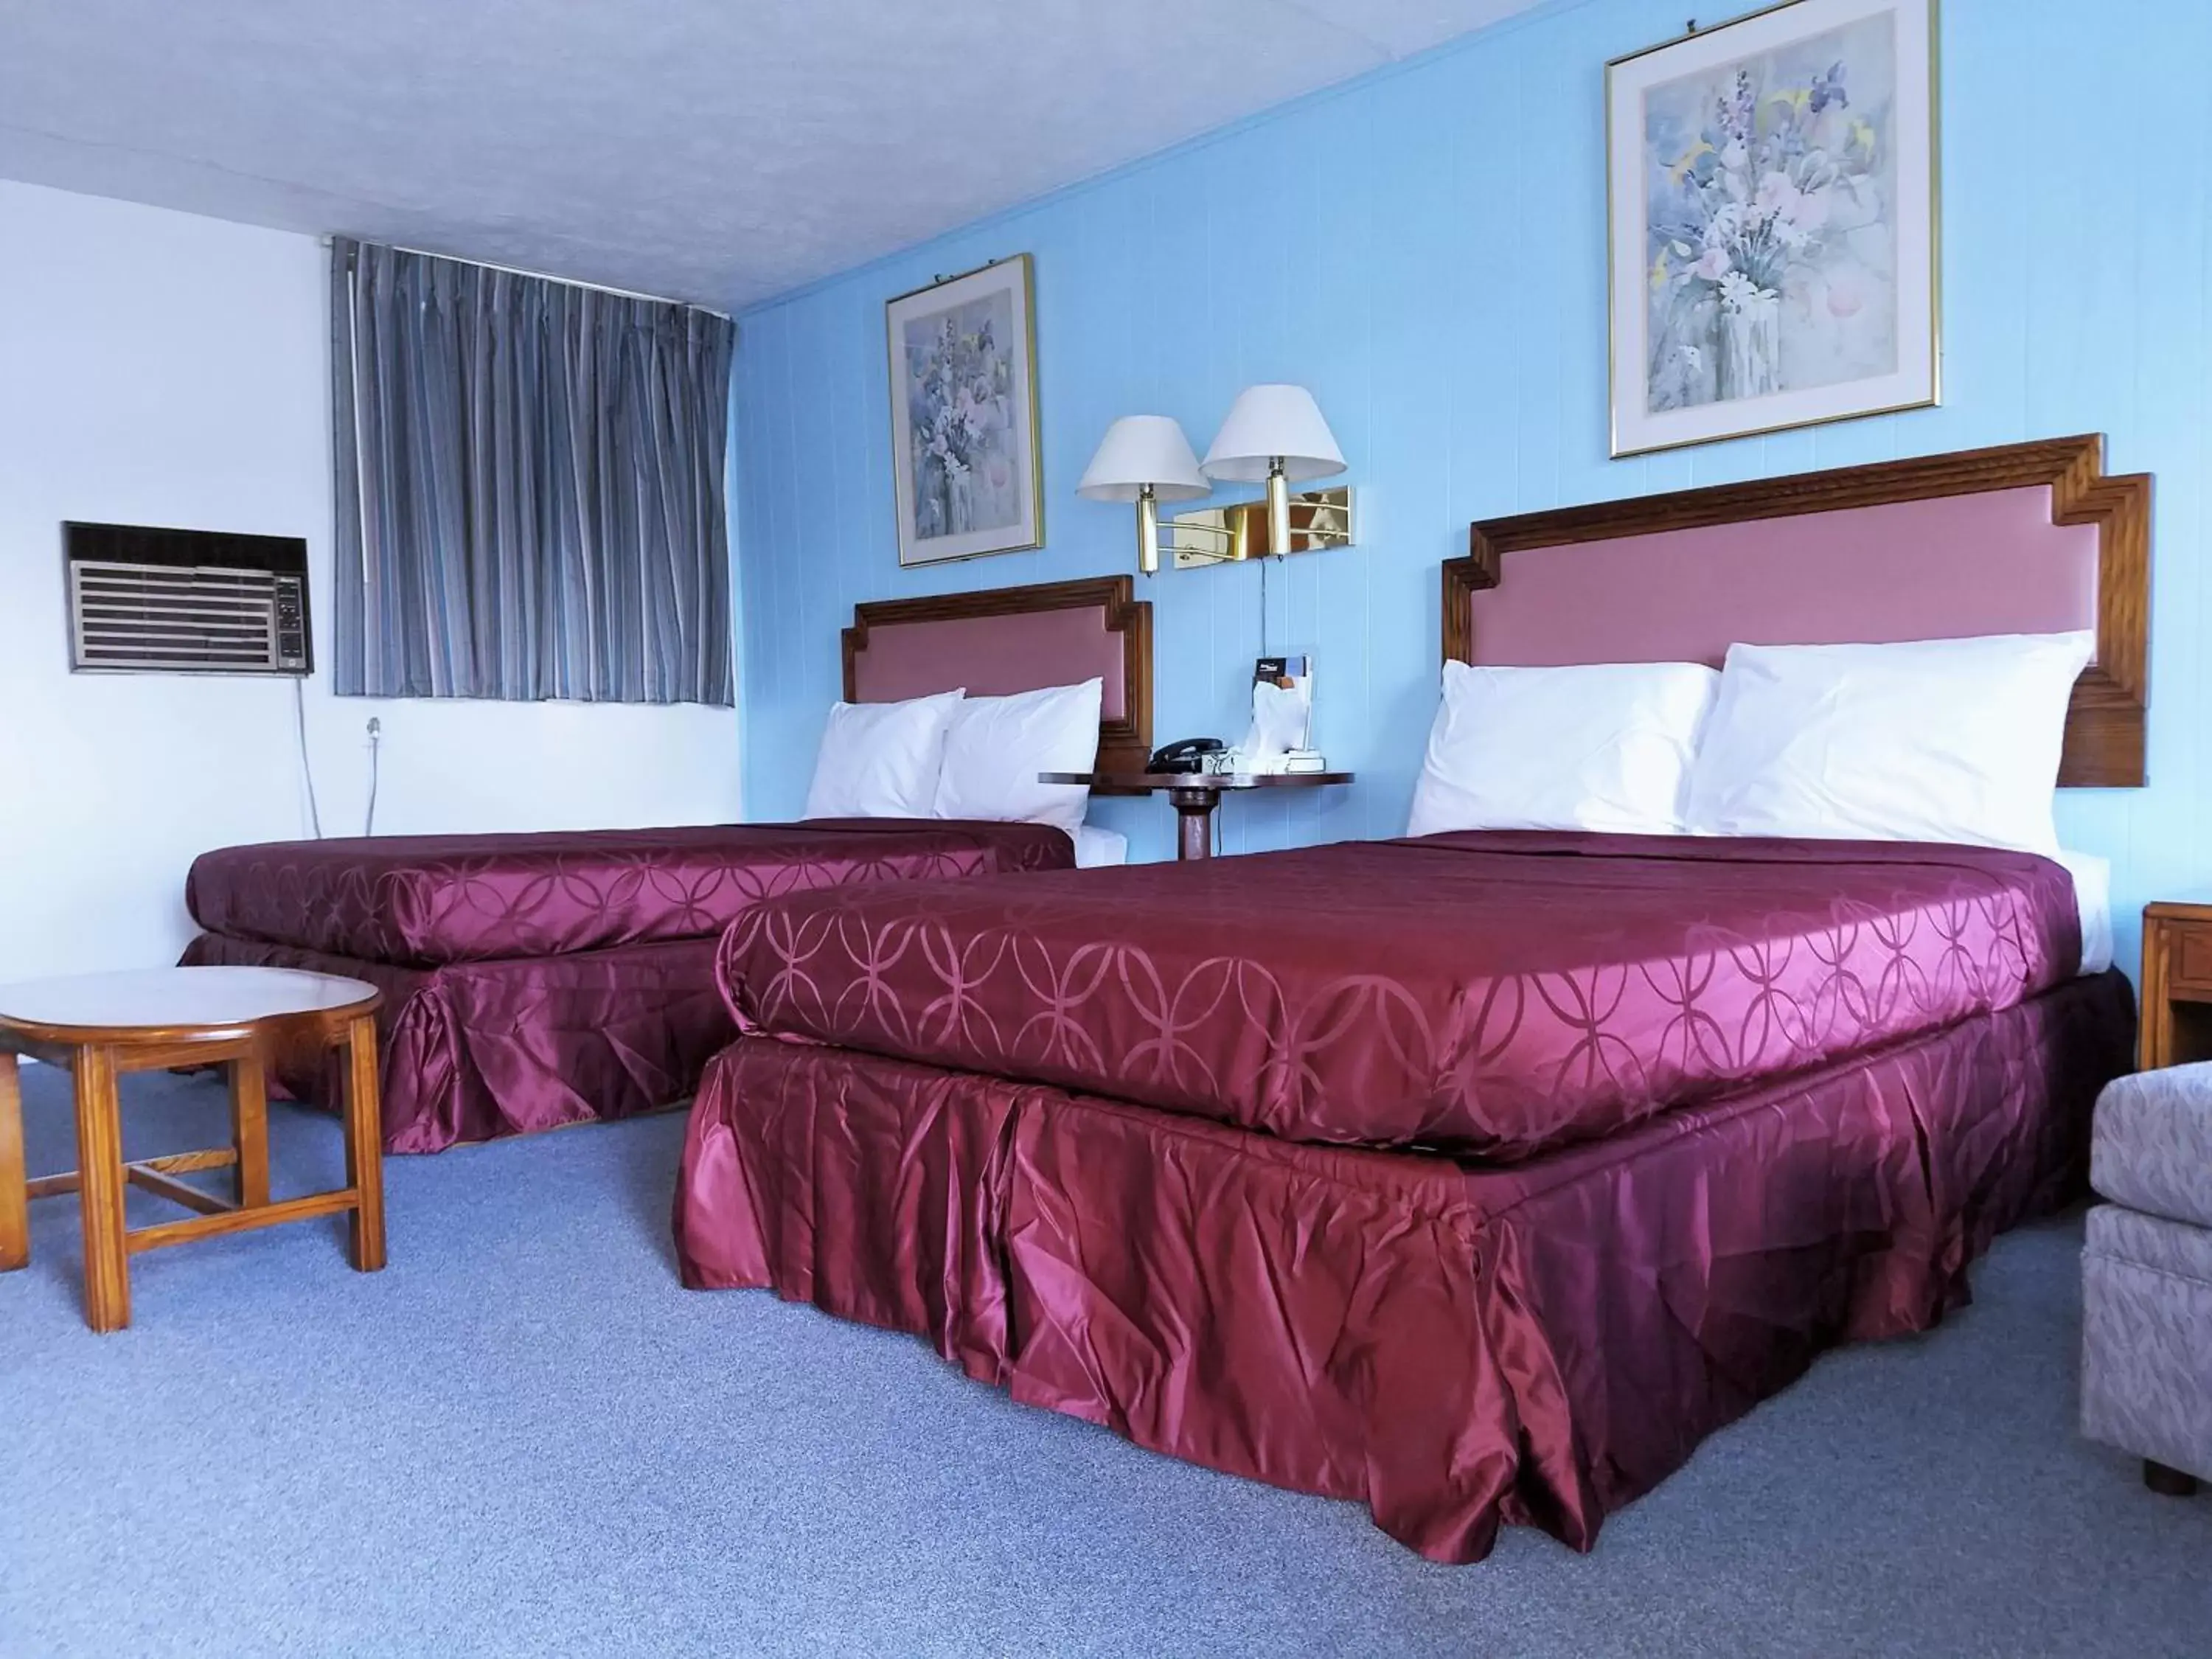 Bed, Room Photo in Royal Inn Motel